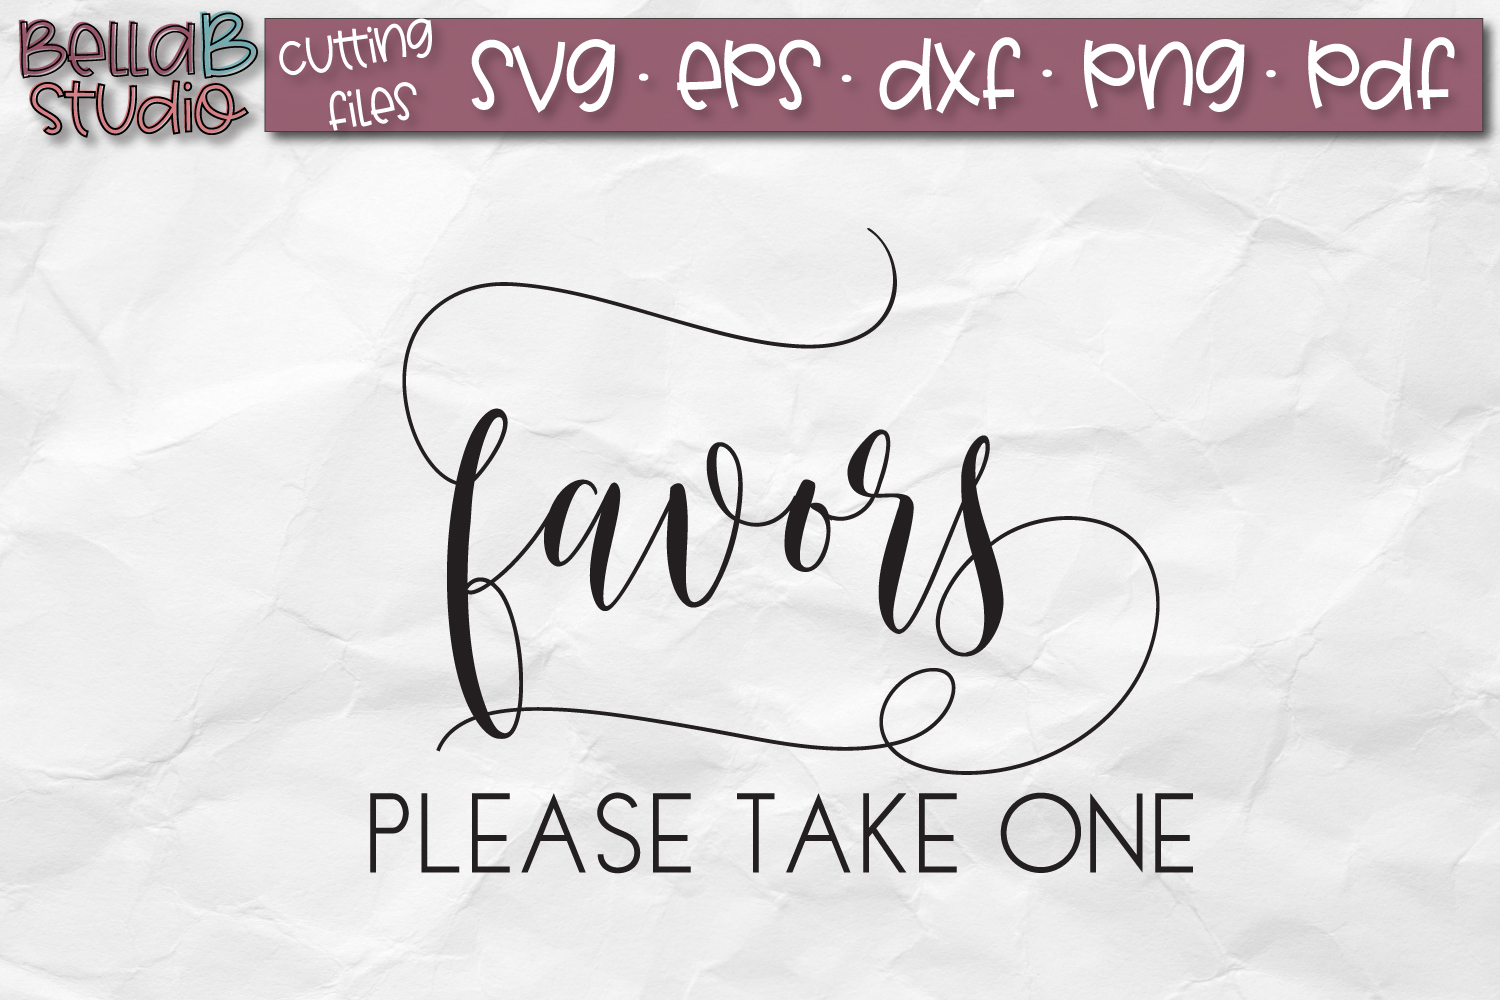 Free Free 108 Wedding Sign Svg SVG PNG EPS DXF File